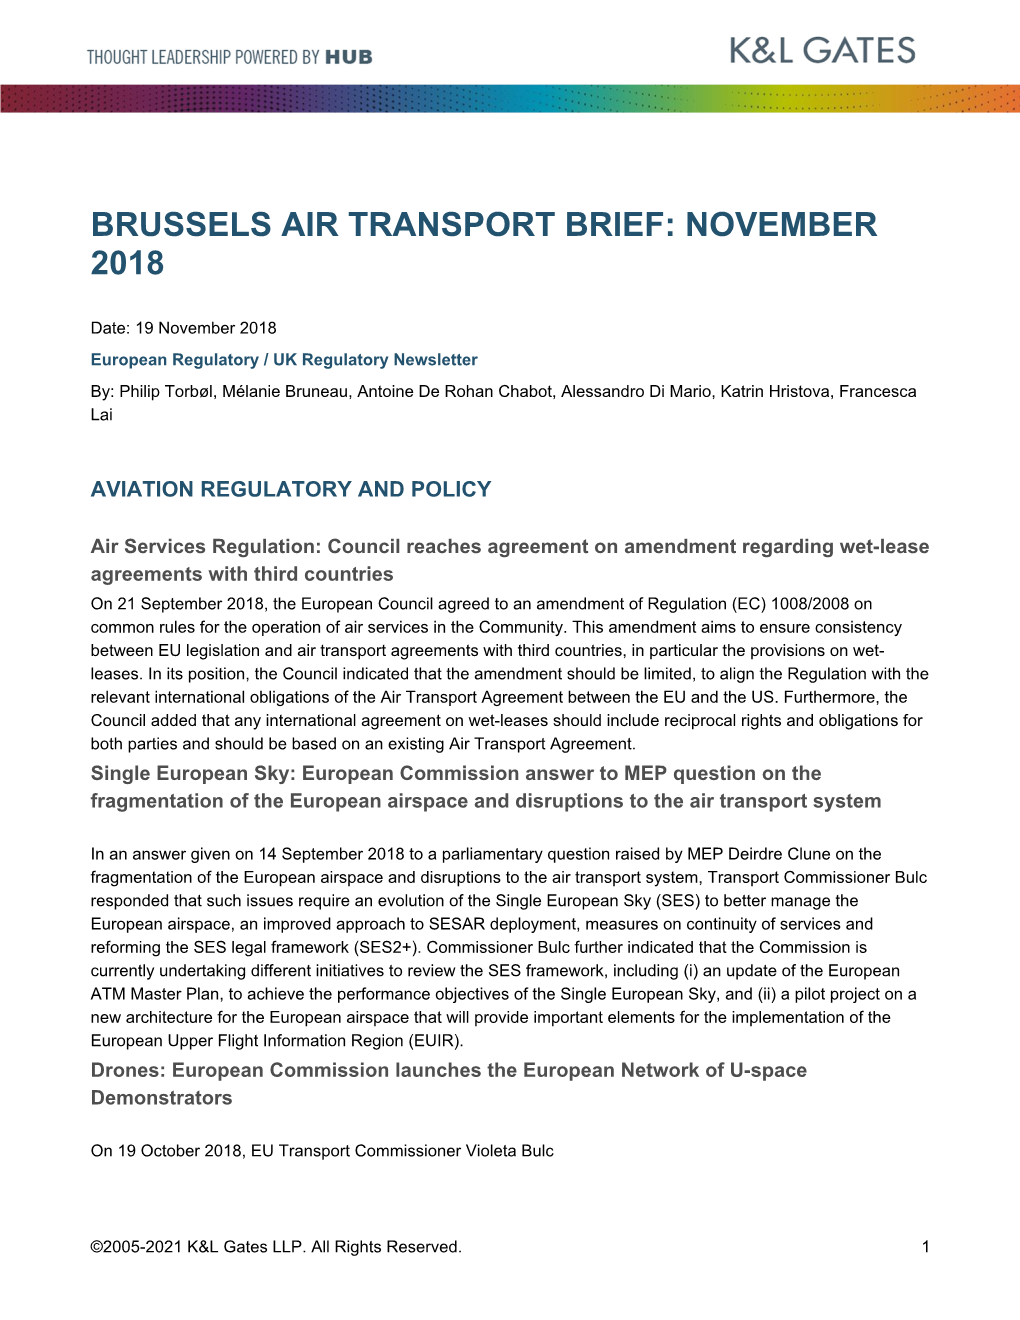 Brussels Air Transport Brief: November 2018